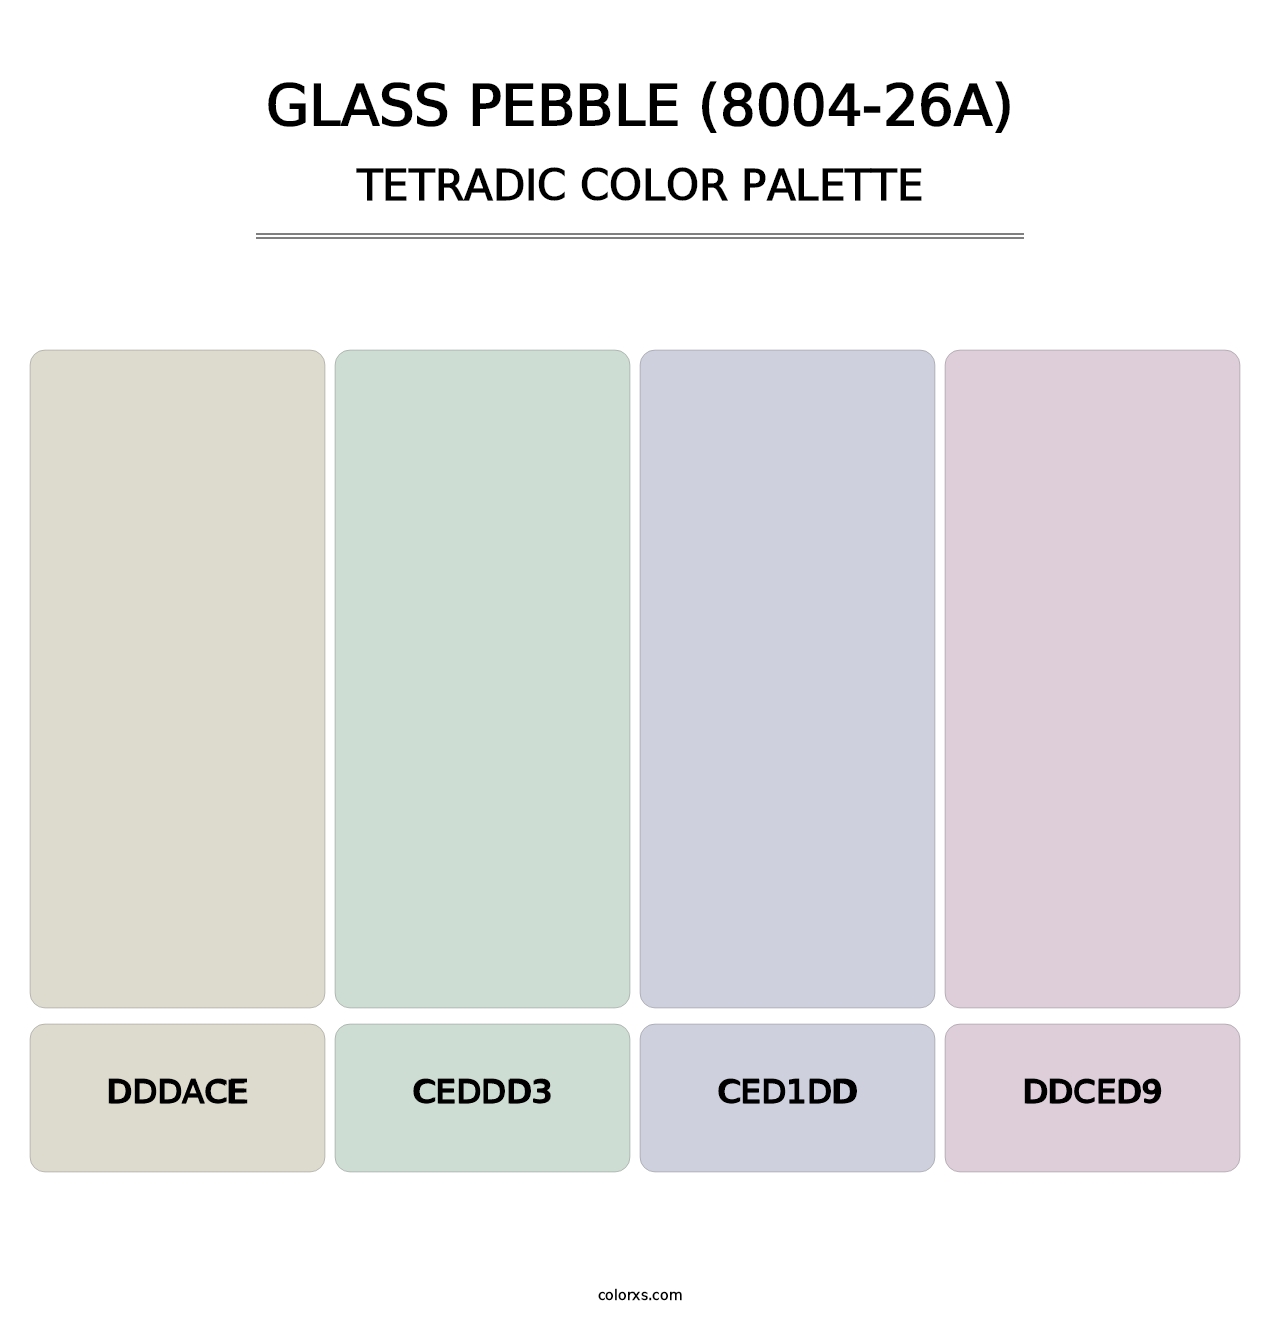 Glass Pebble (8004-26A) - Tetradic Color Palette